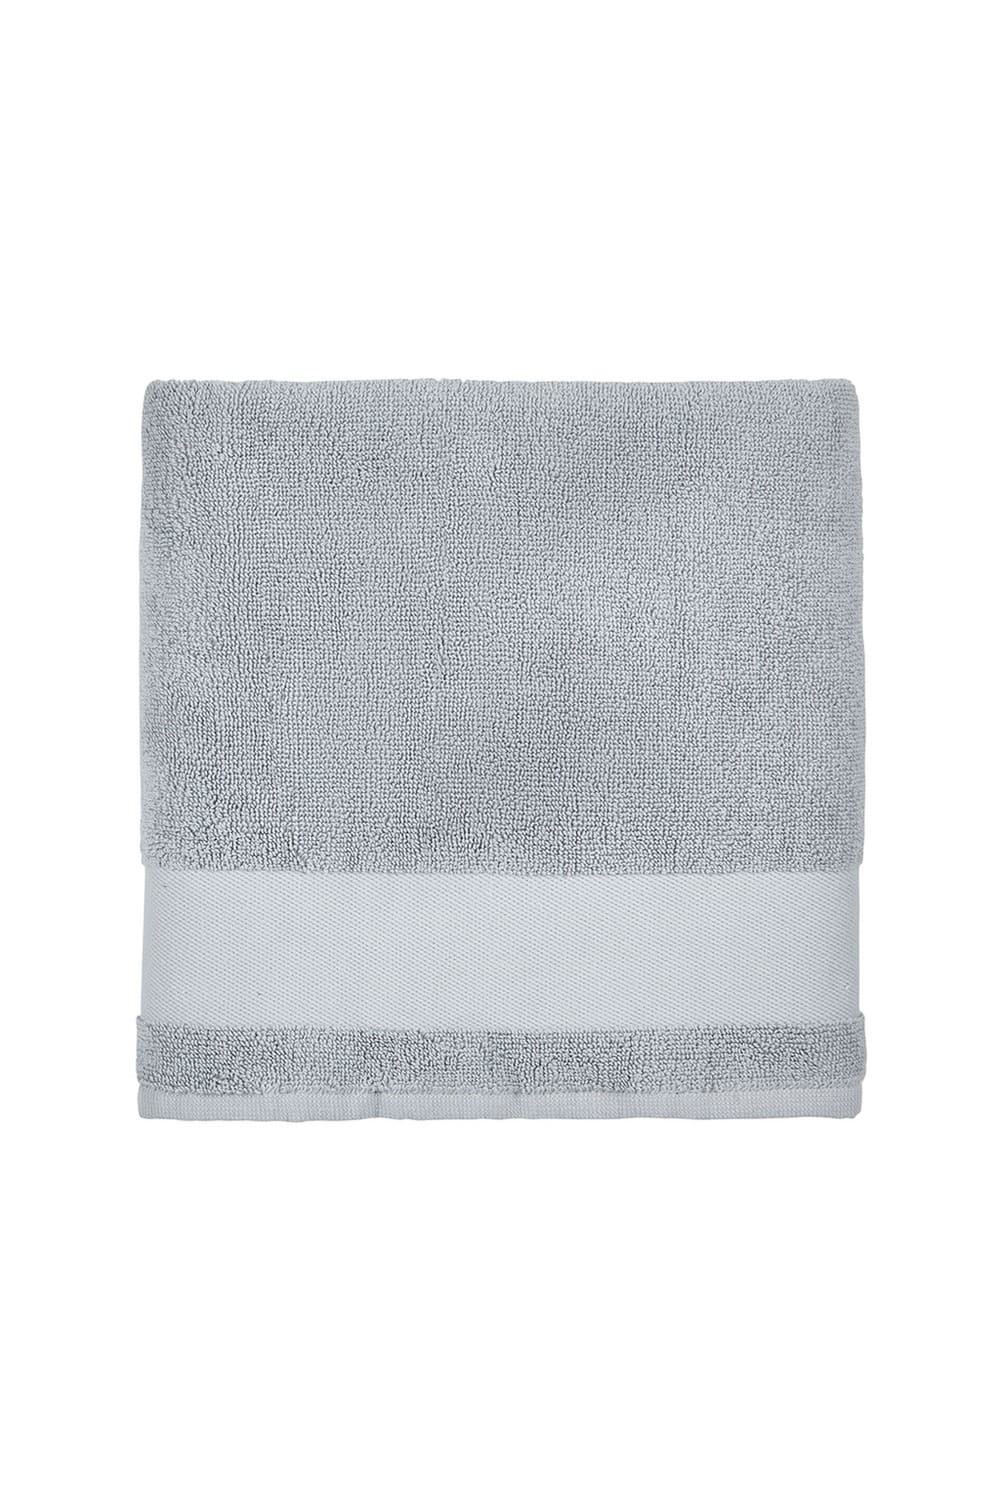 SOLS Peninsula 70 Bath Towel (Pure Gray) (One Size)